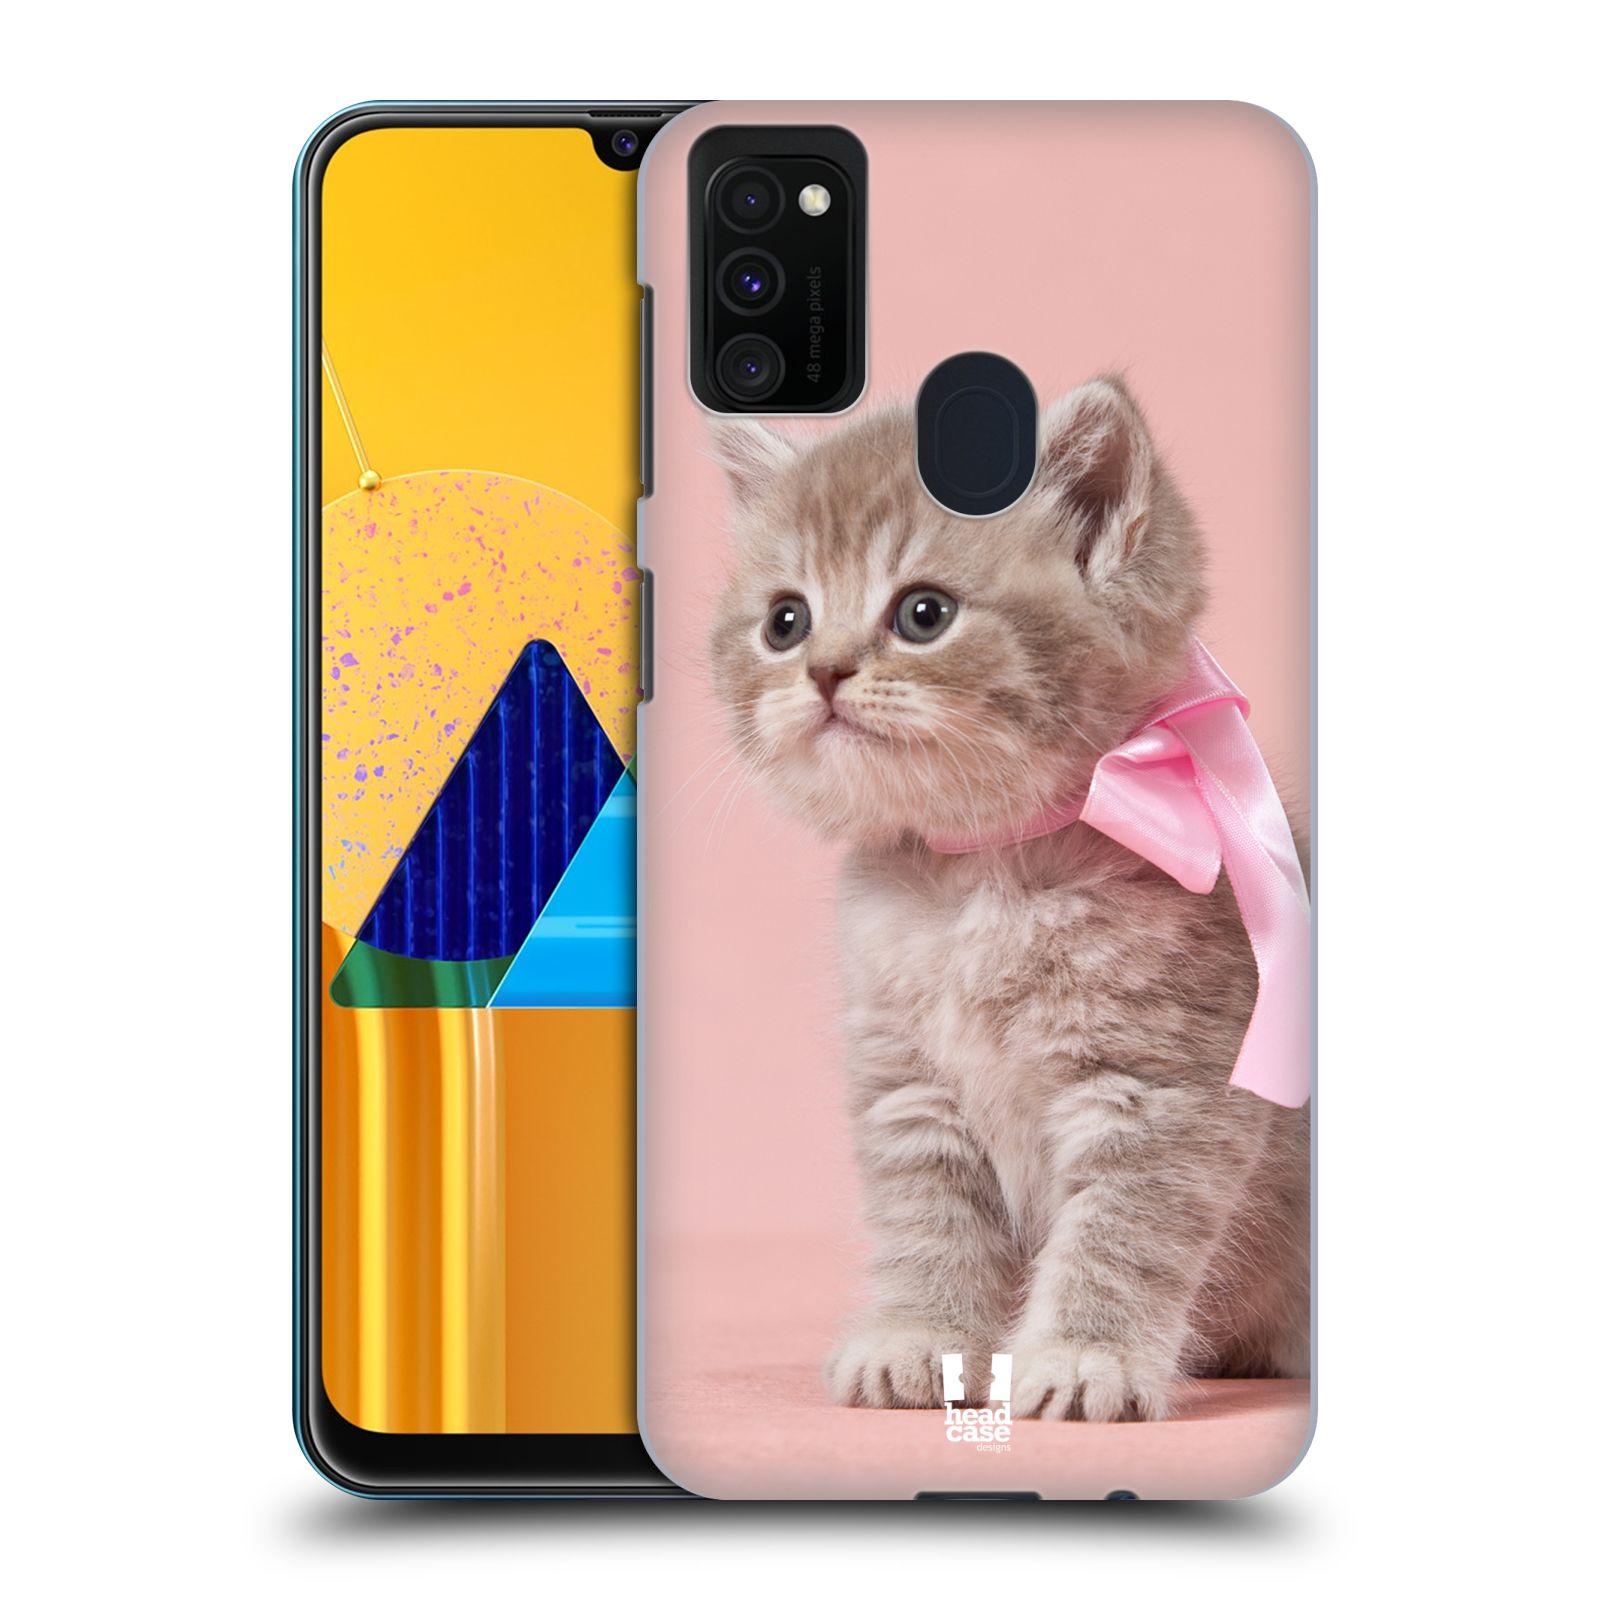 Plastový obal HEAD CASE na mobil Samsung Galaxy M30s vzor Kočičky koťata foto kotě s růžovou mašlí